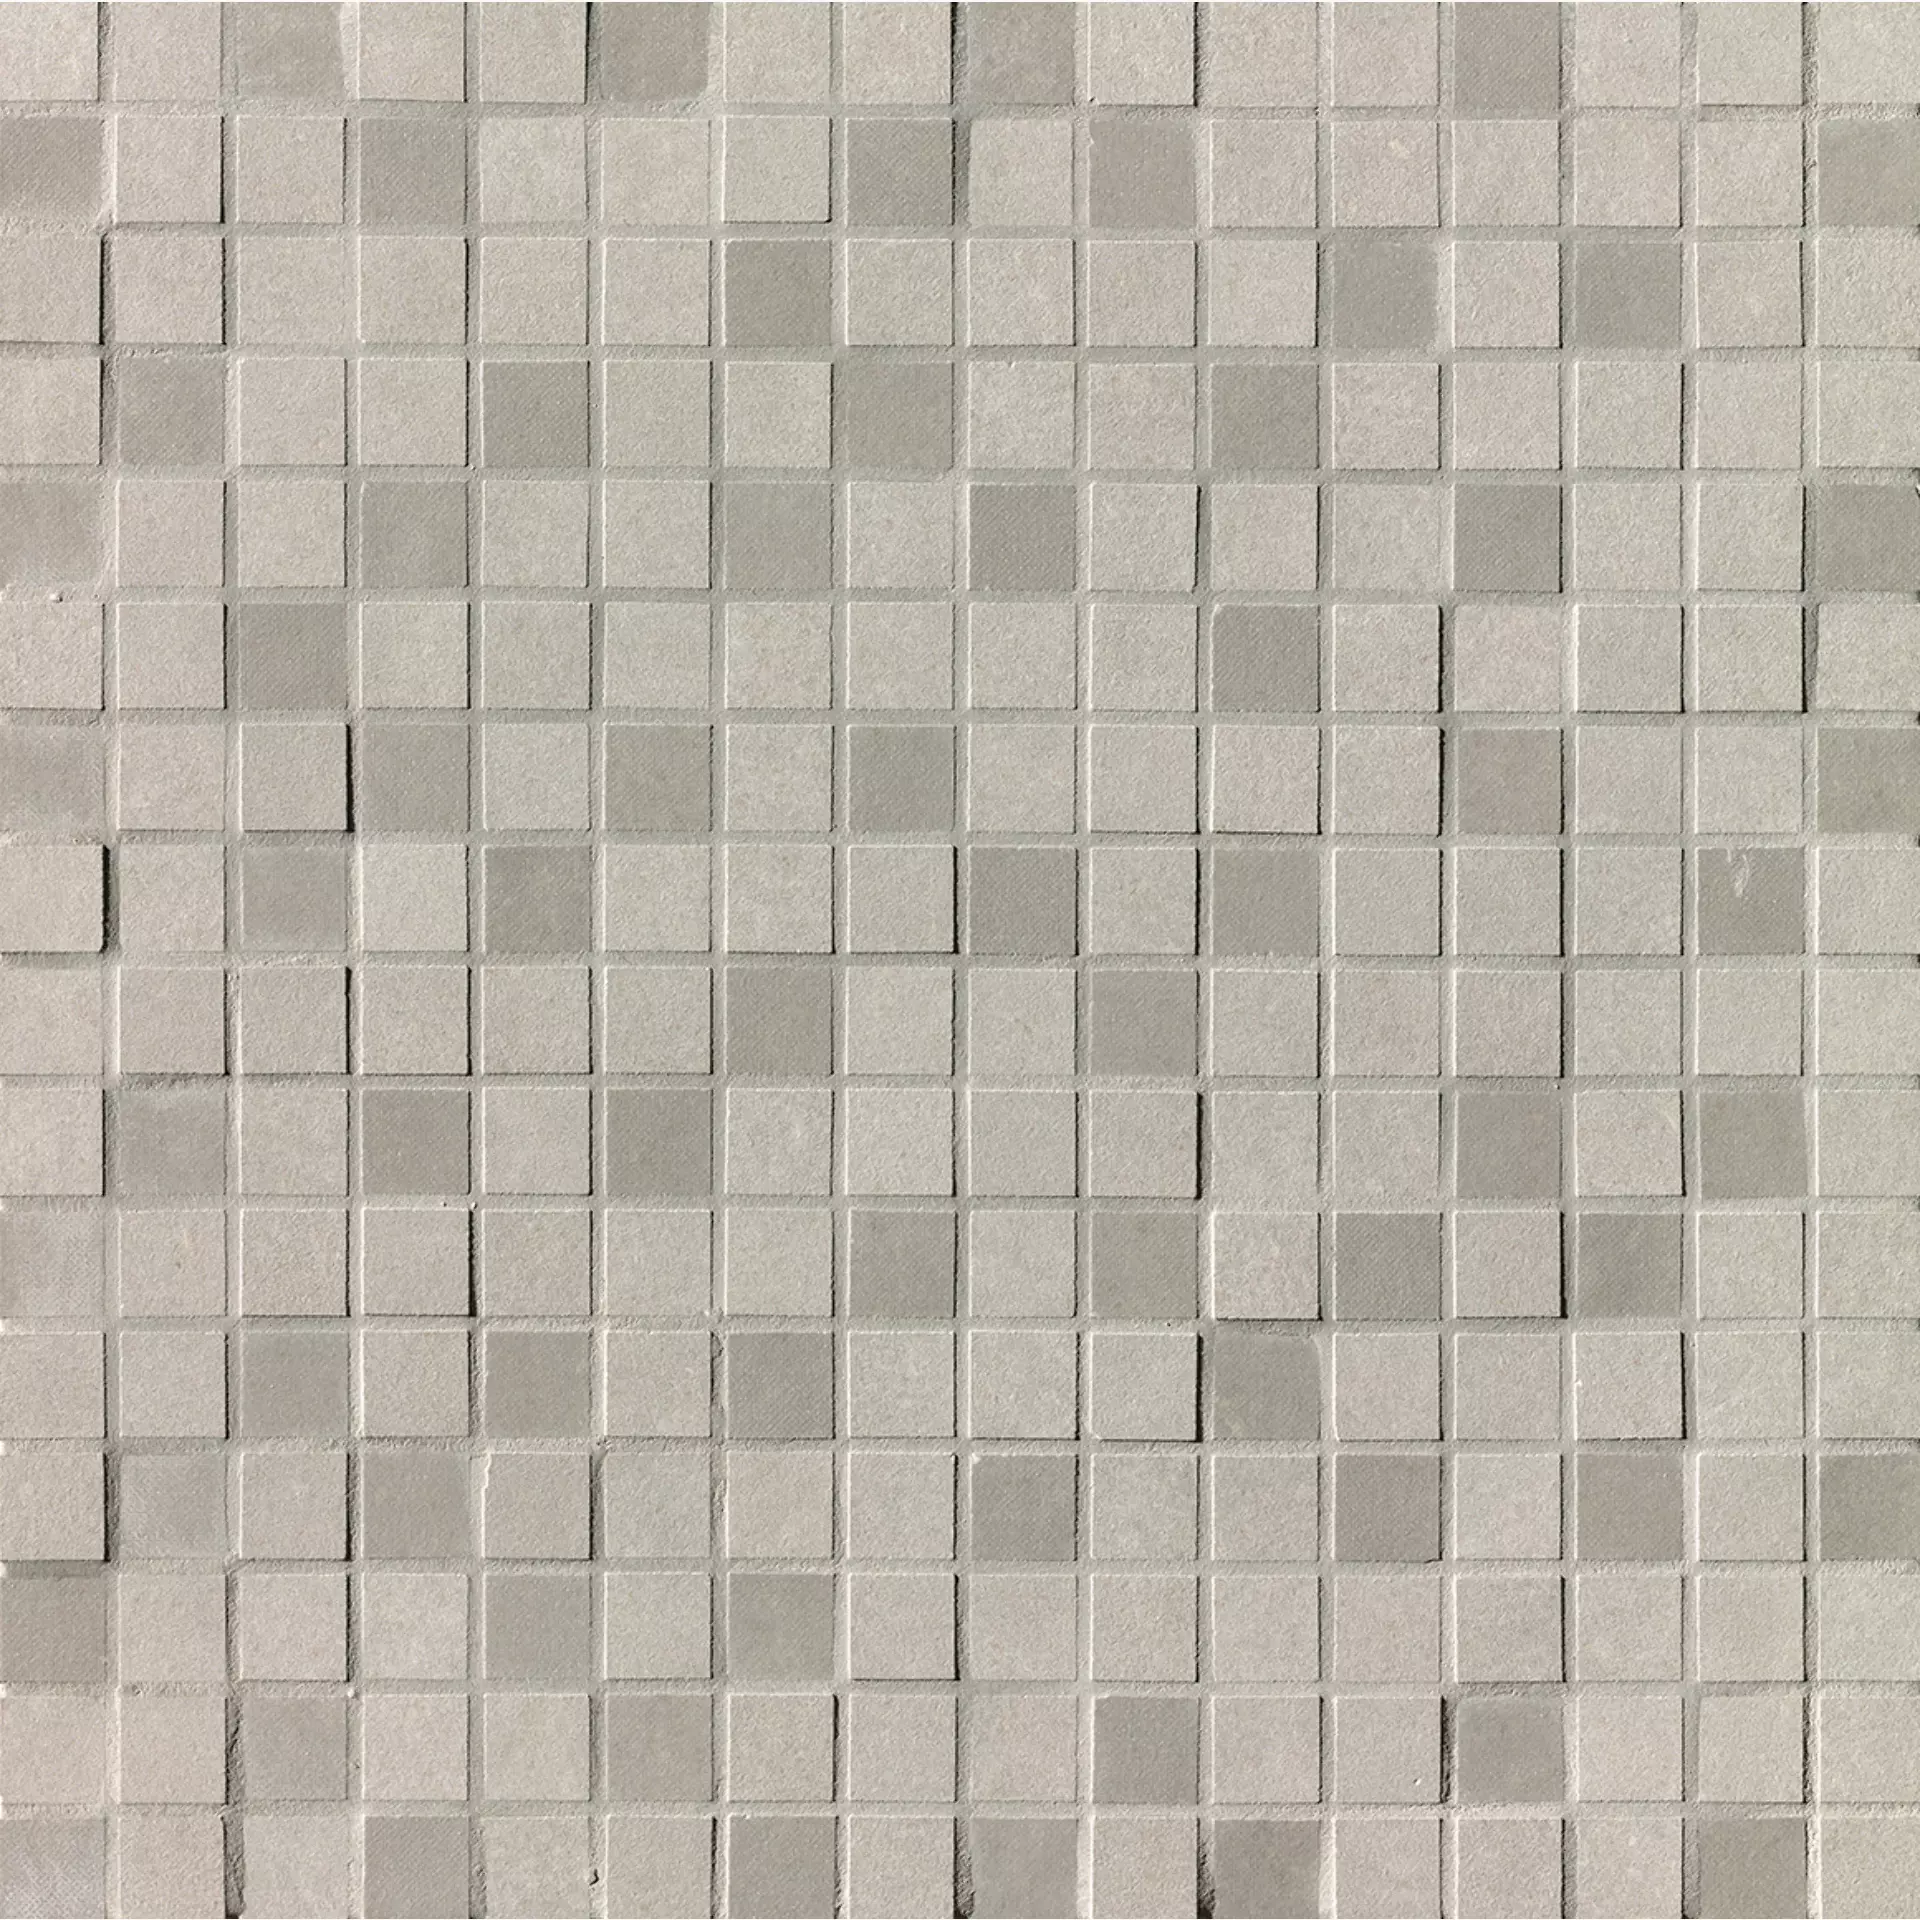 FAP Bloom Grey Matt Grey fOYT matt 30,5x30,5cm Mosaik